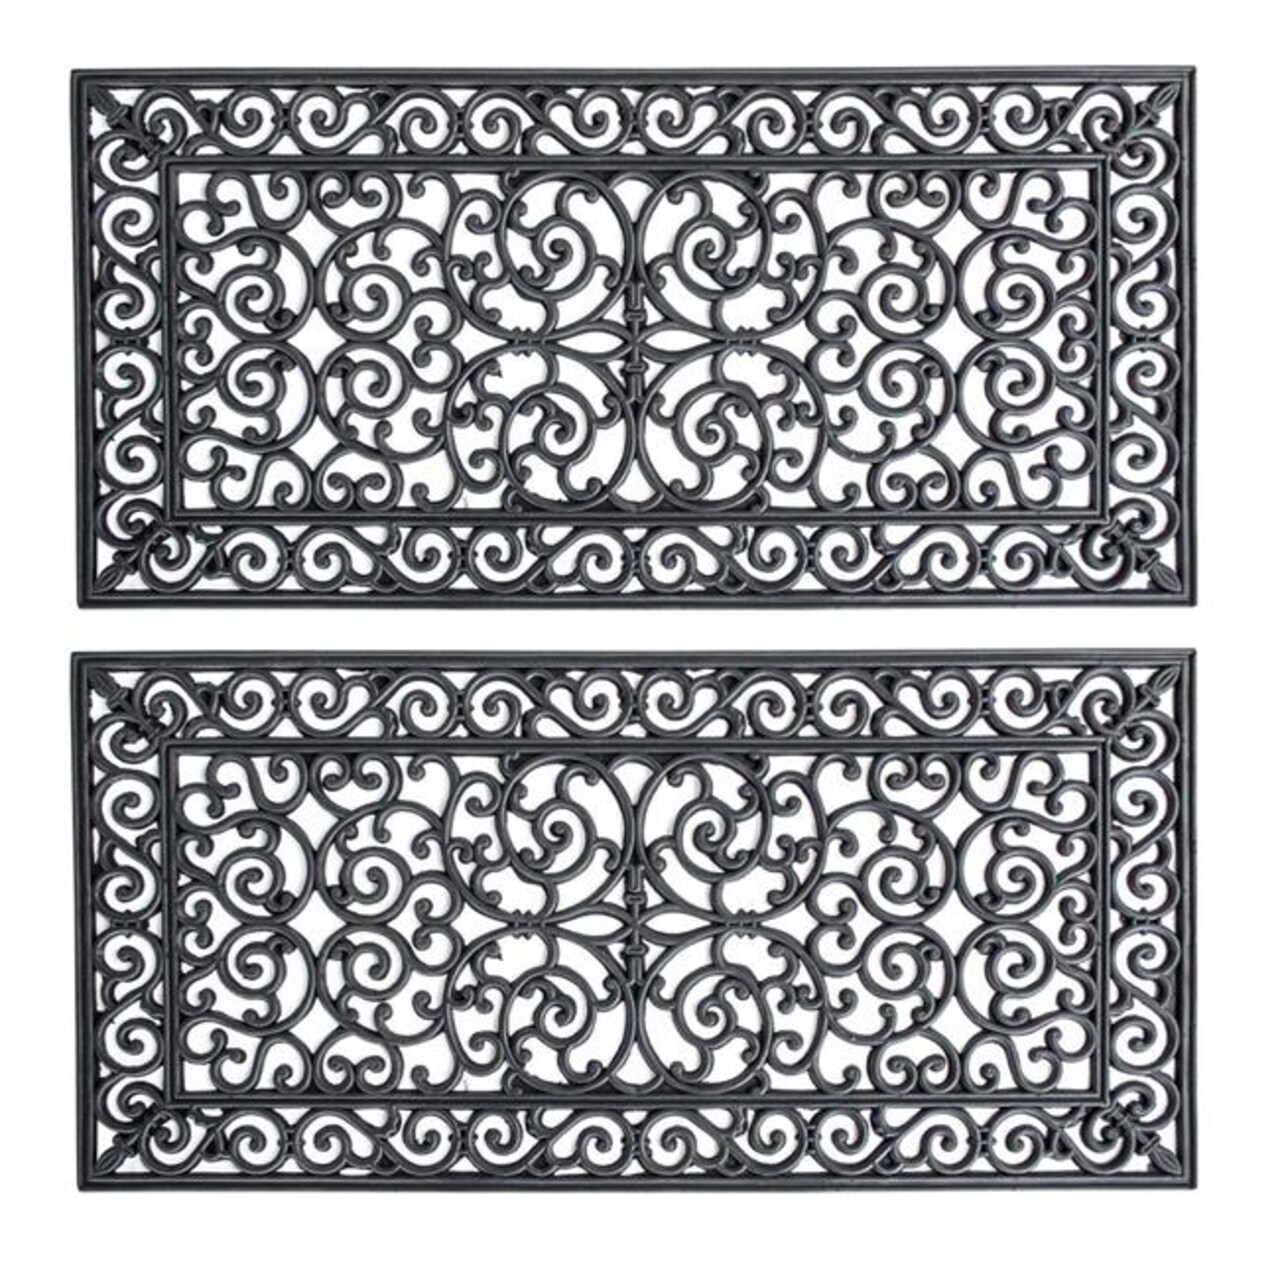 AmeriHome RMATDE42-2PK 4 x 2 ft. Decorative Scrollwork Entryway Rubber Door Mat, Black - Pack of 2